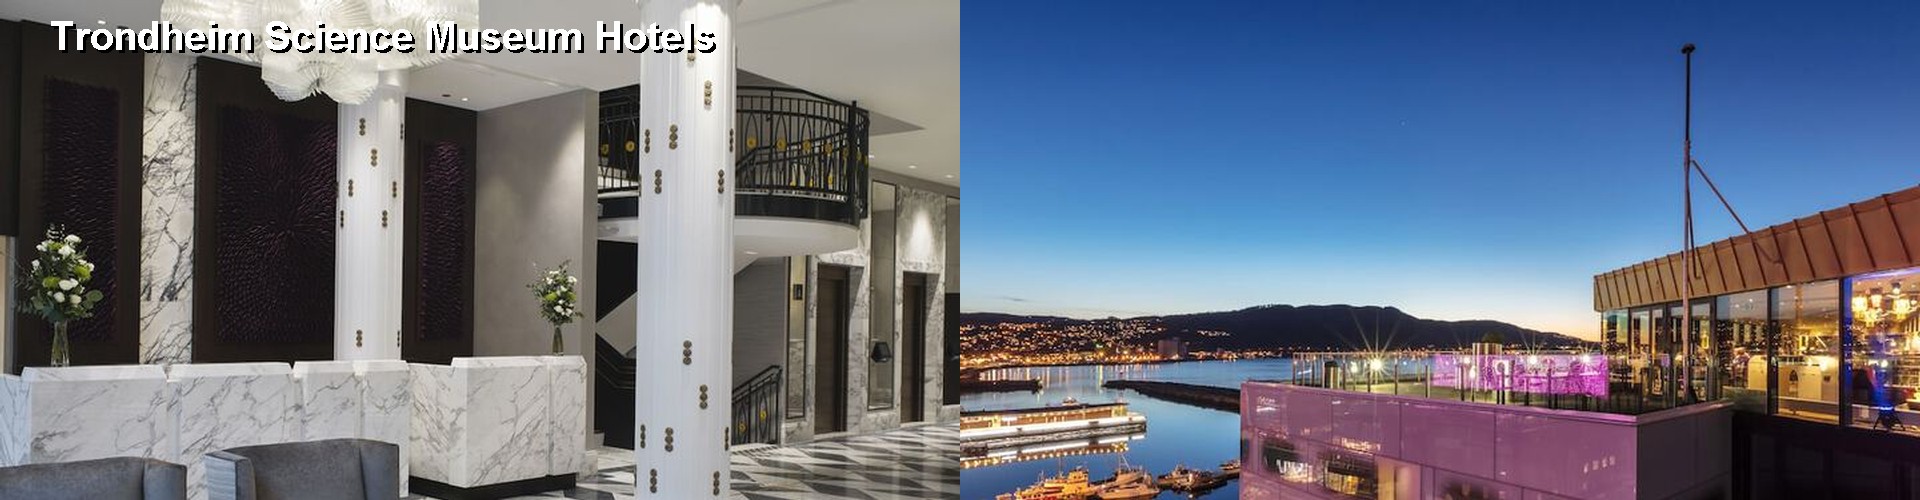 5 Best Hotels near Trondheim Science Museum